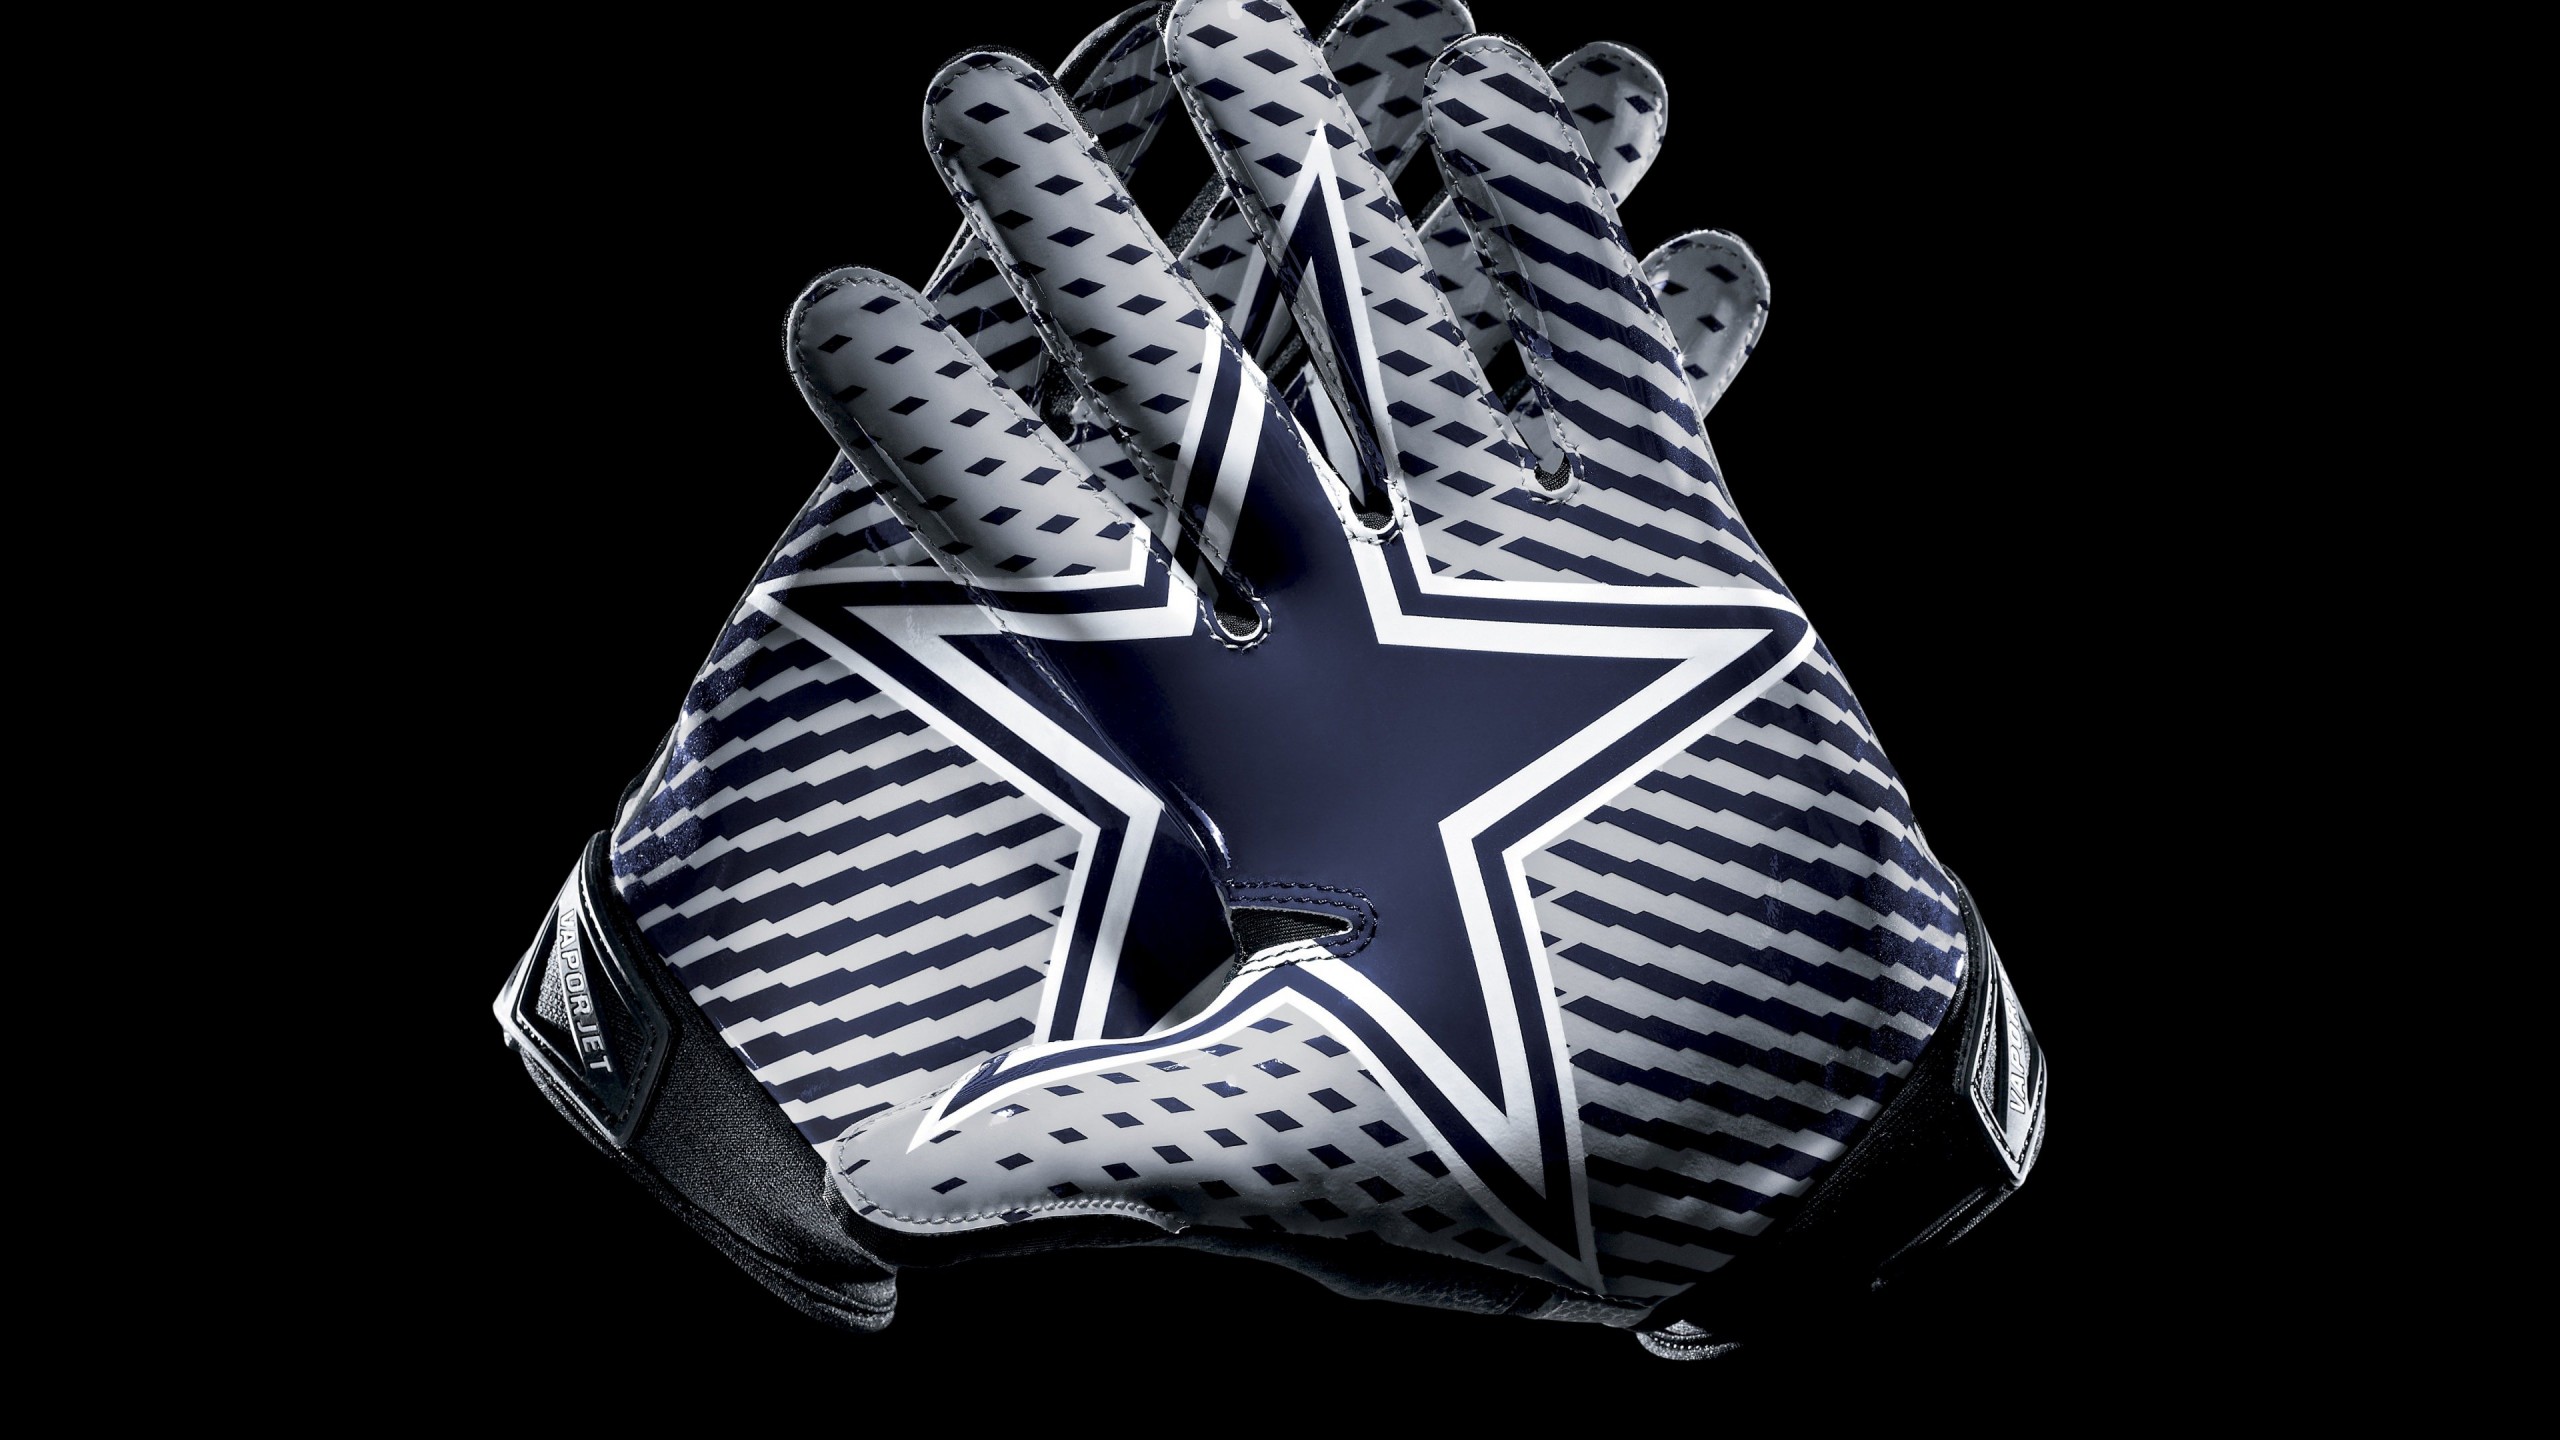 Dallas Cowboys Gloves Wallpaper for Social Media YouTube Channel Art